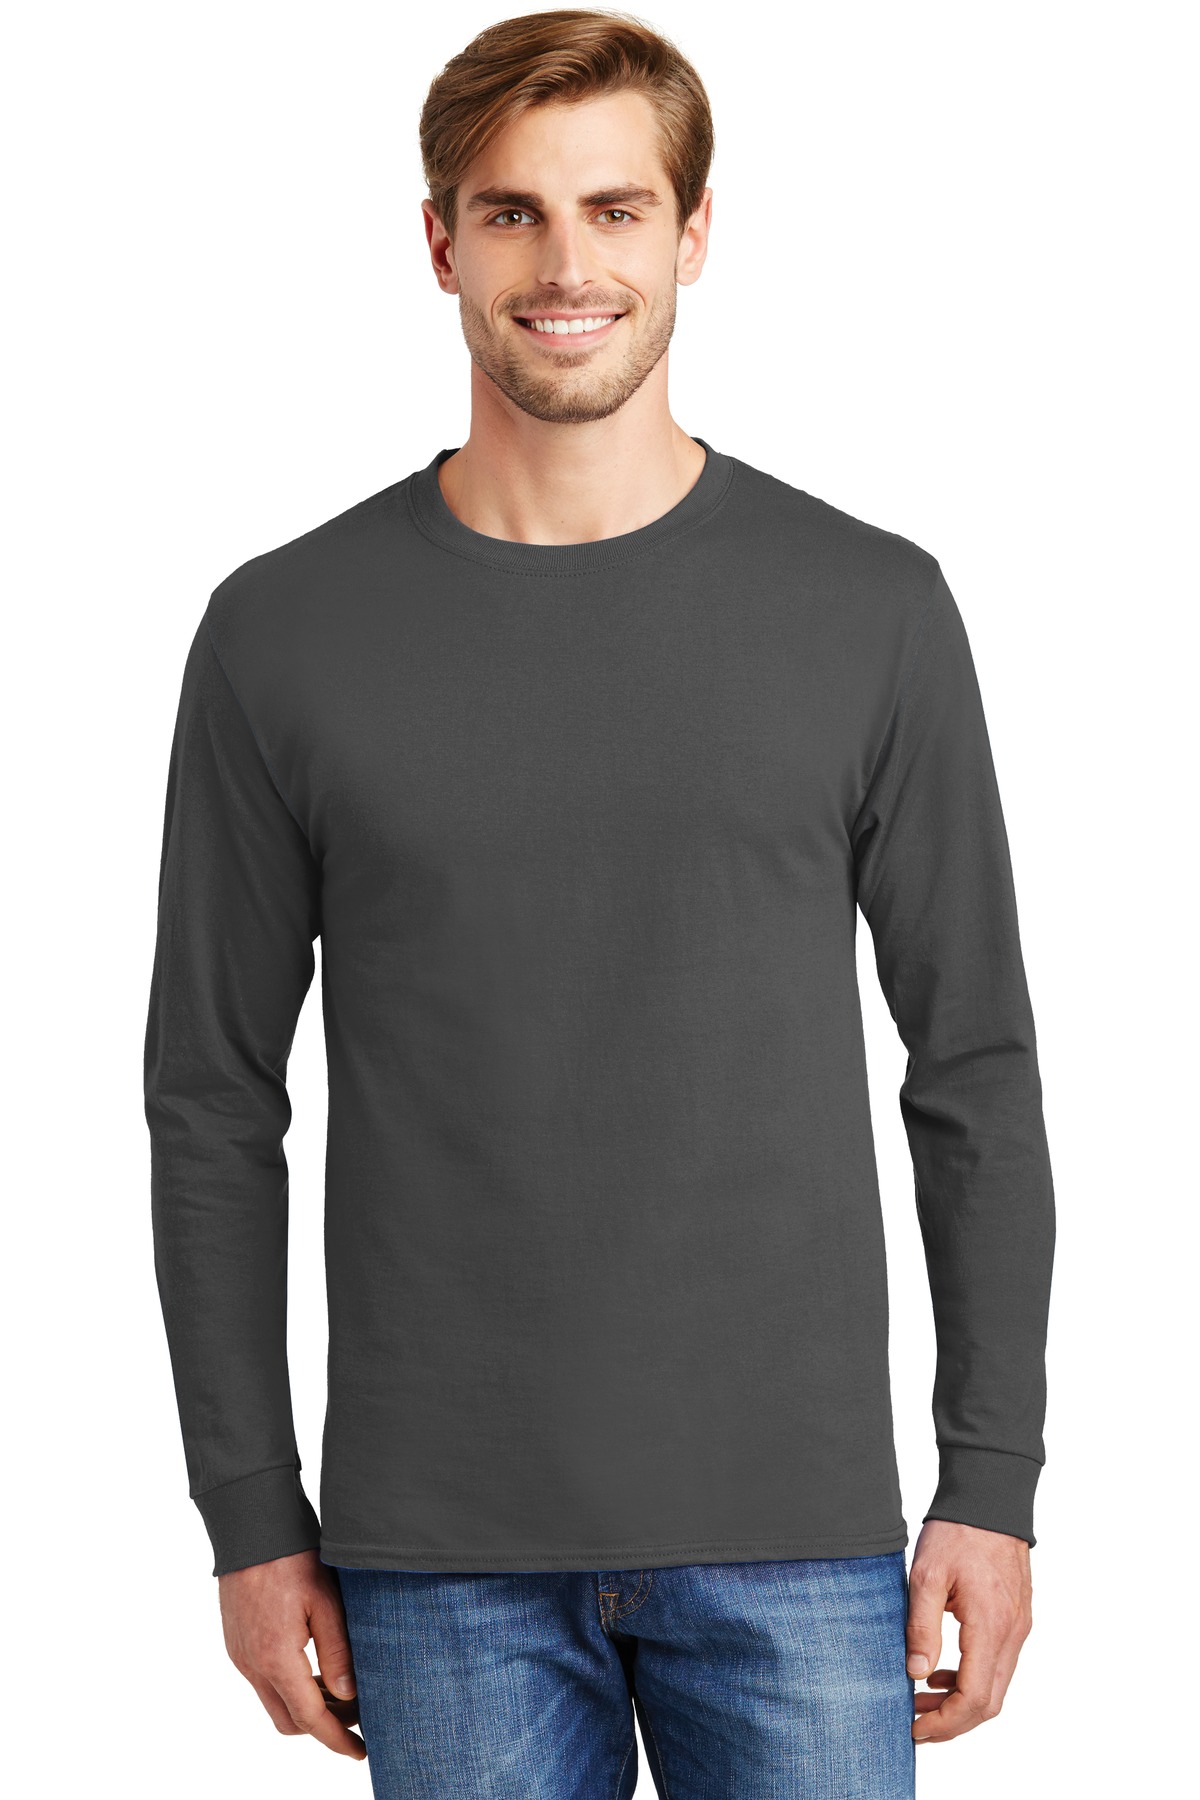 Hanes - Authentic 100% Cotton Long Sleeve T-Shirt.  5586